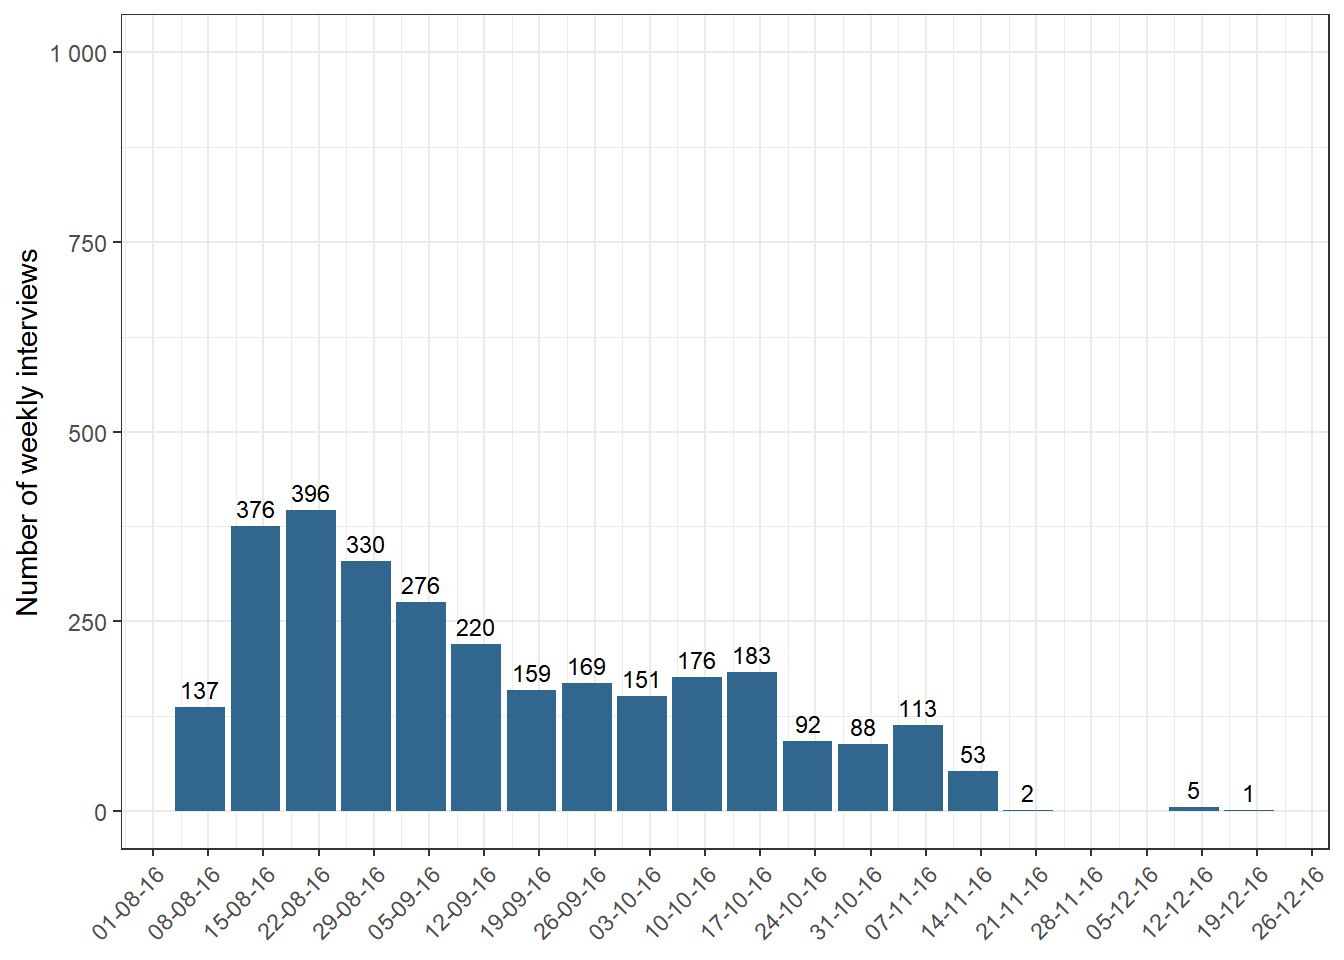 Number of weekly interviews, wave 2016